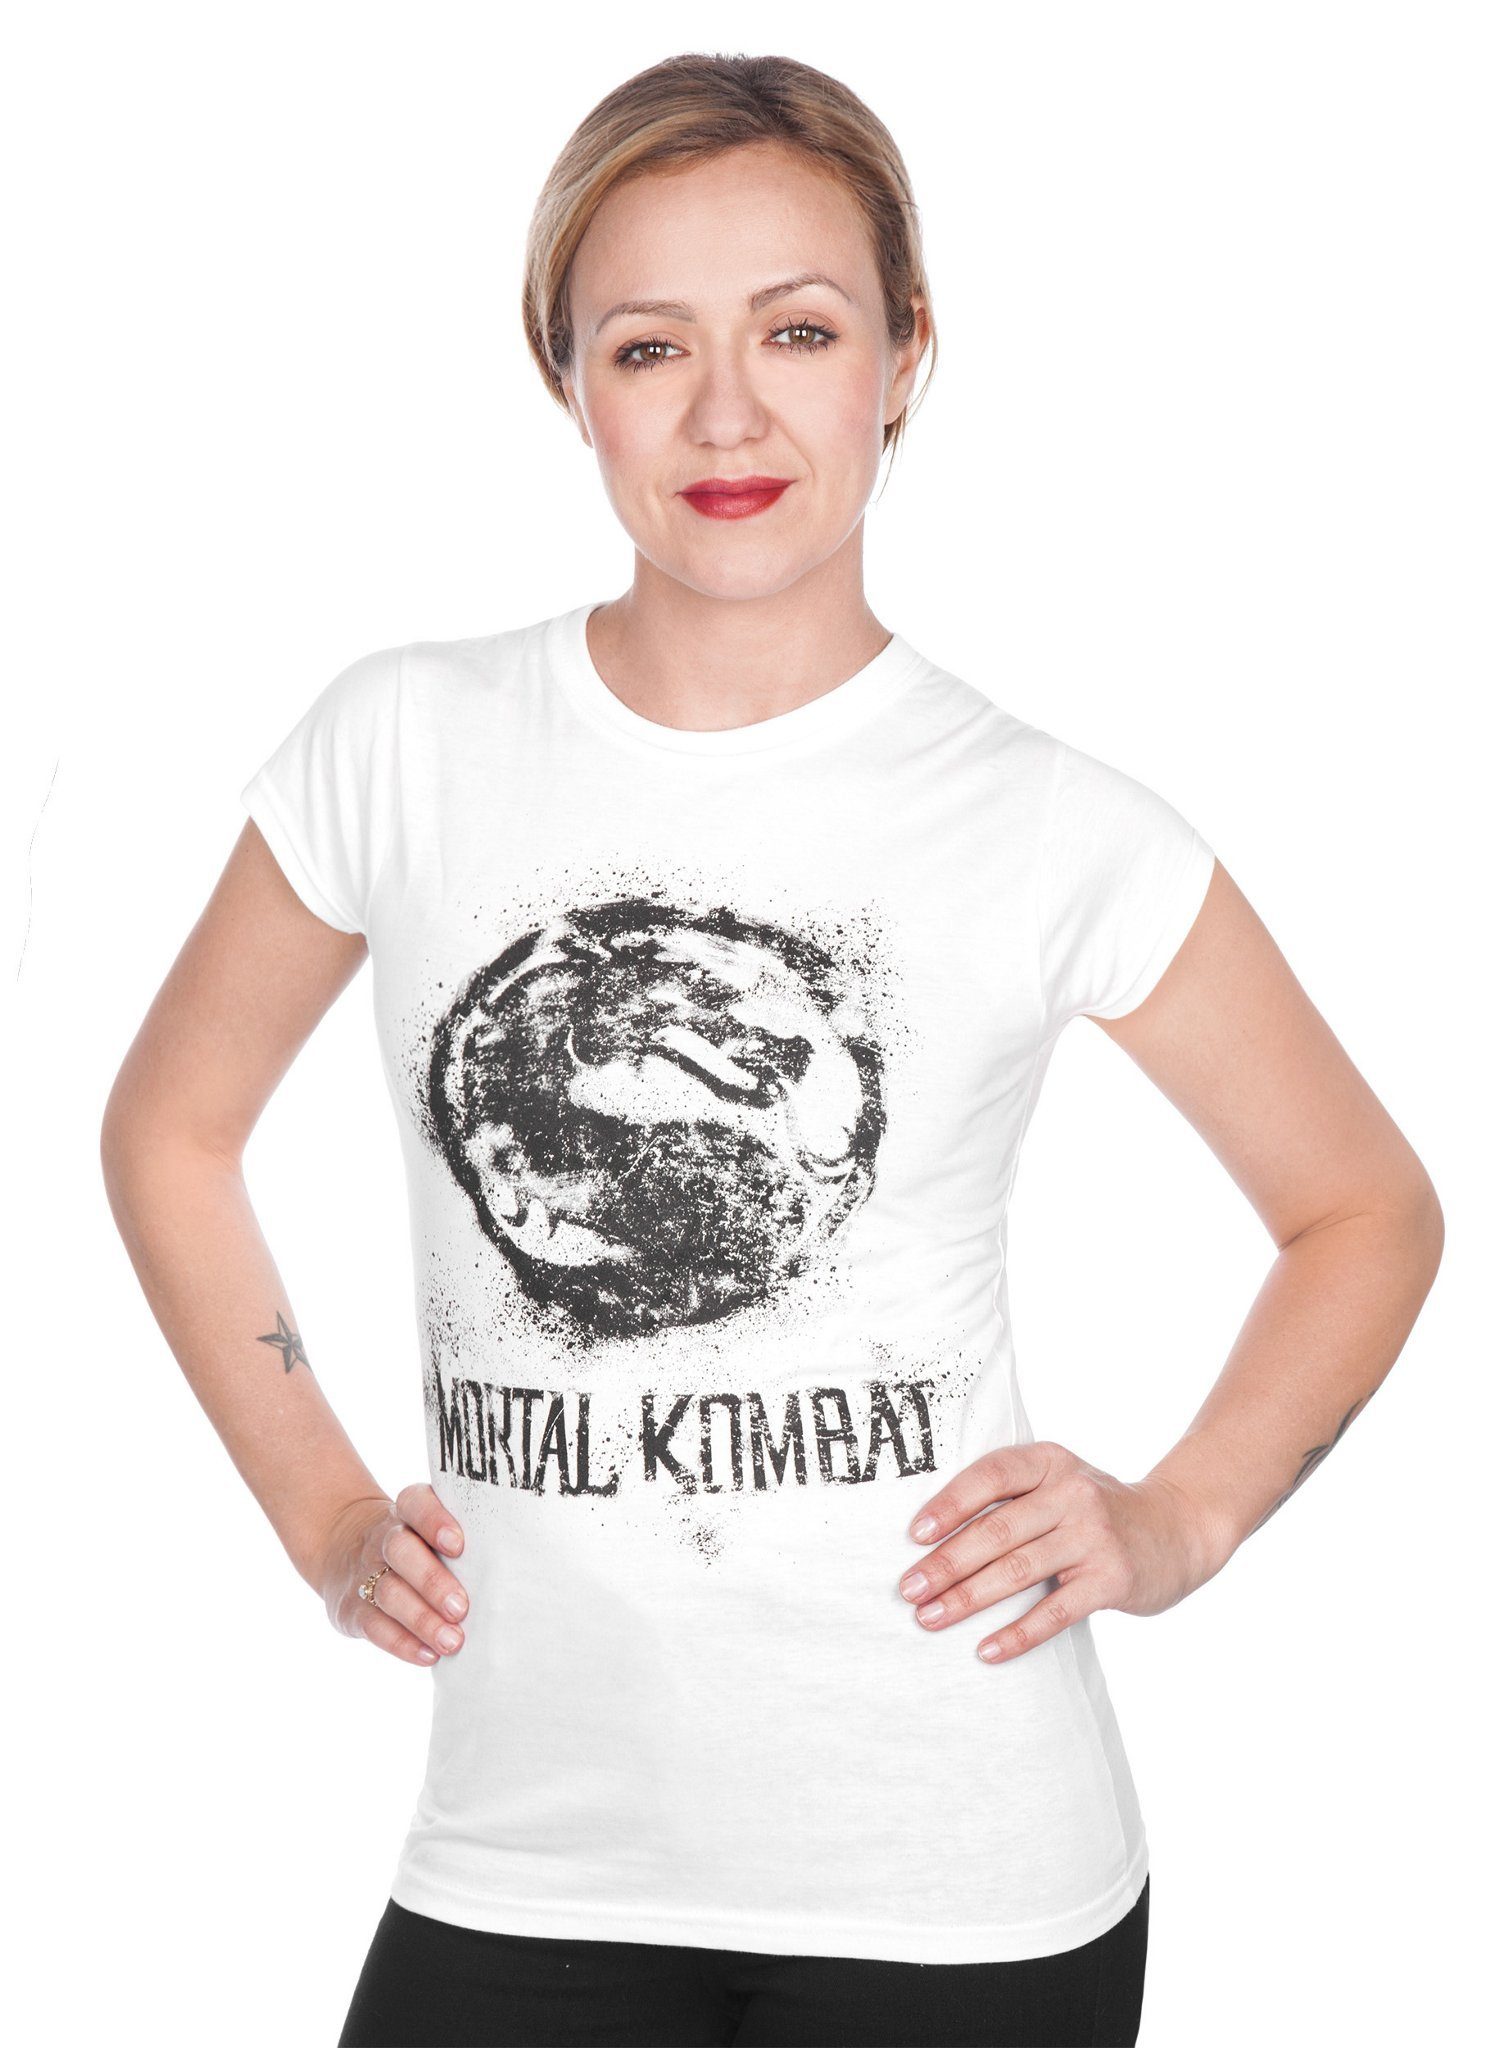 leid ein ist Das Kombat Girlie Mortal Metamorph für Gamer Shirt Shirt und cooles Drache Girlie Hemd T-Shirt